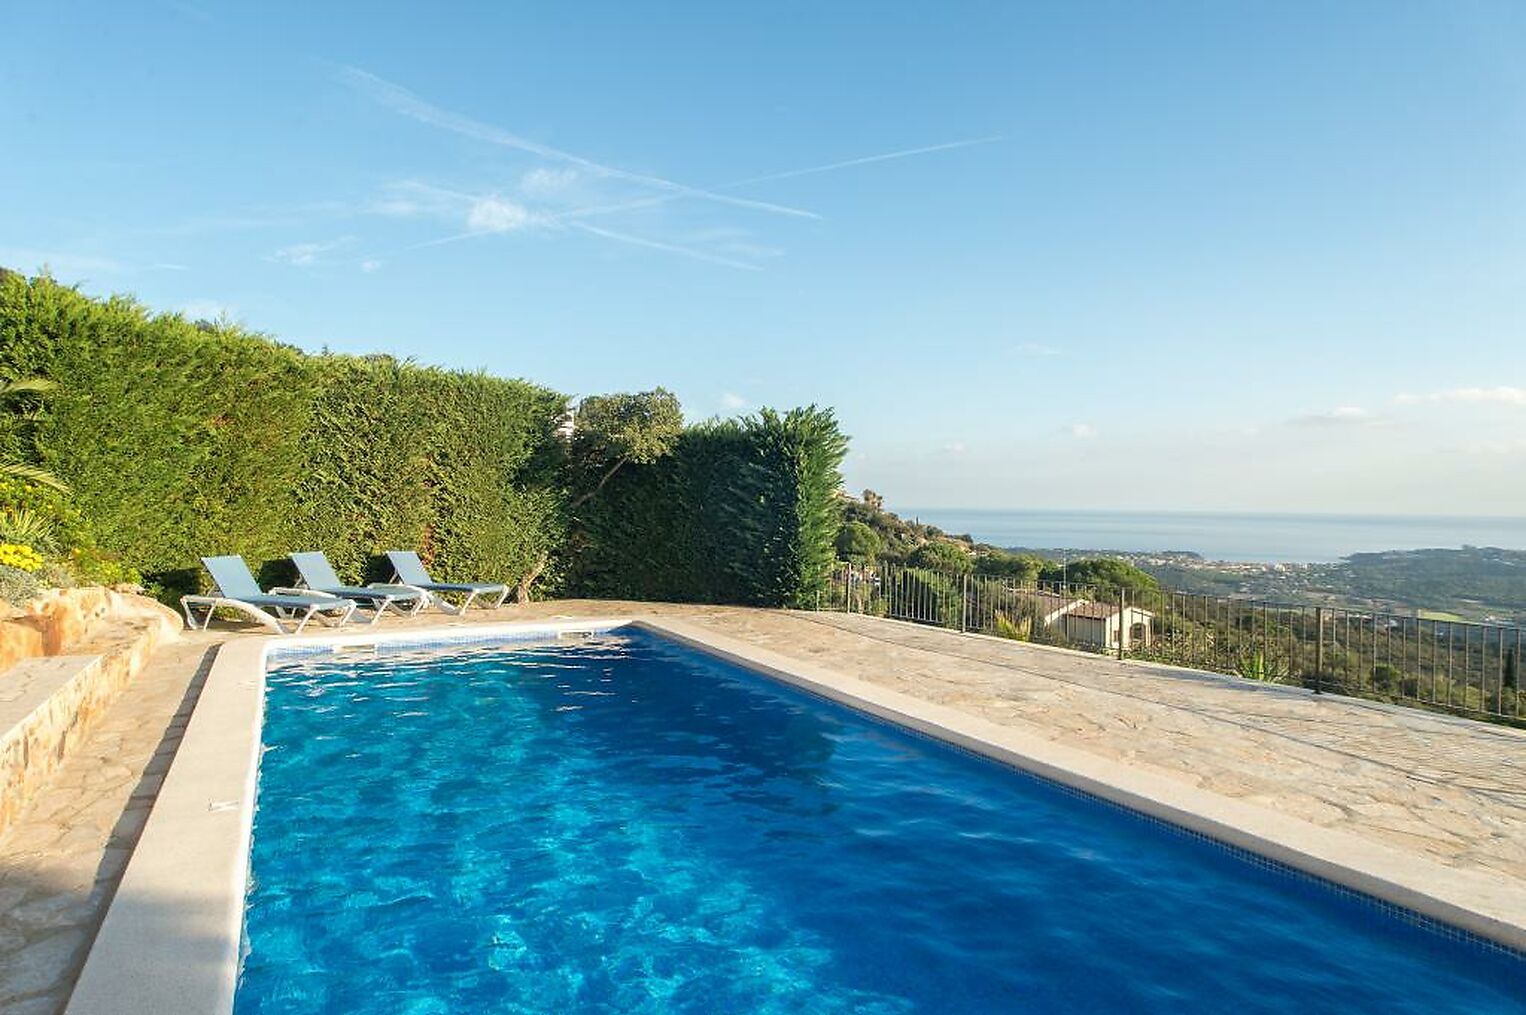 Villa for sale in Mas Nou (Platja d'Aro) with beautiful sea views.